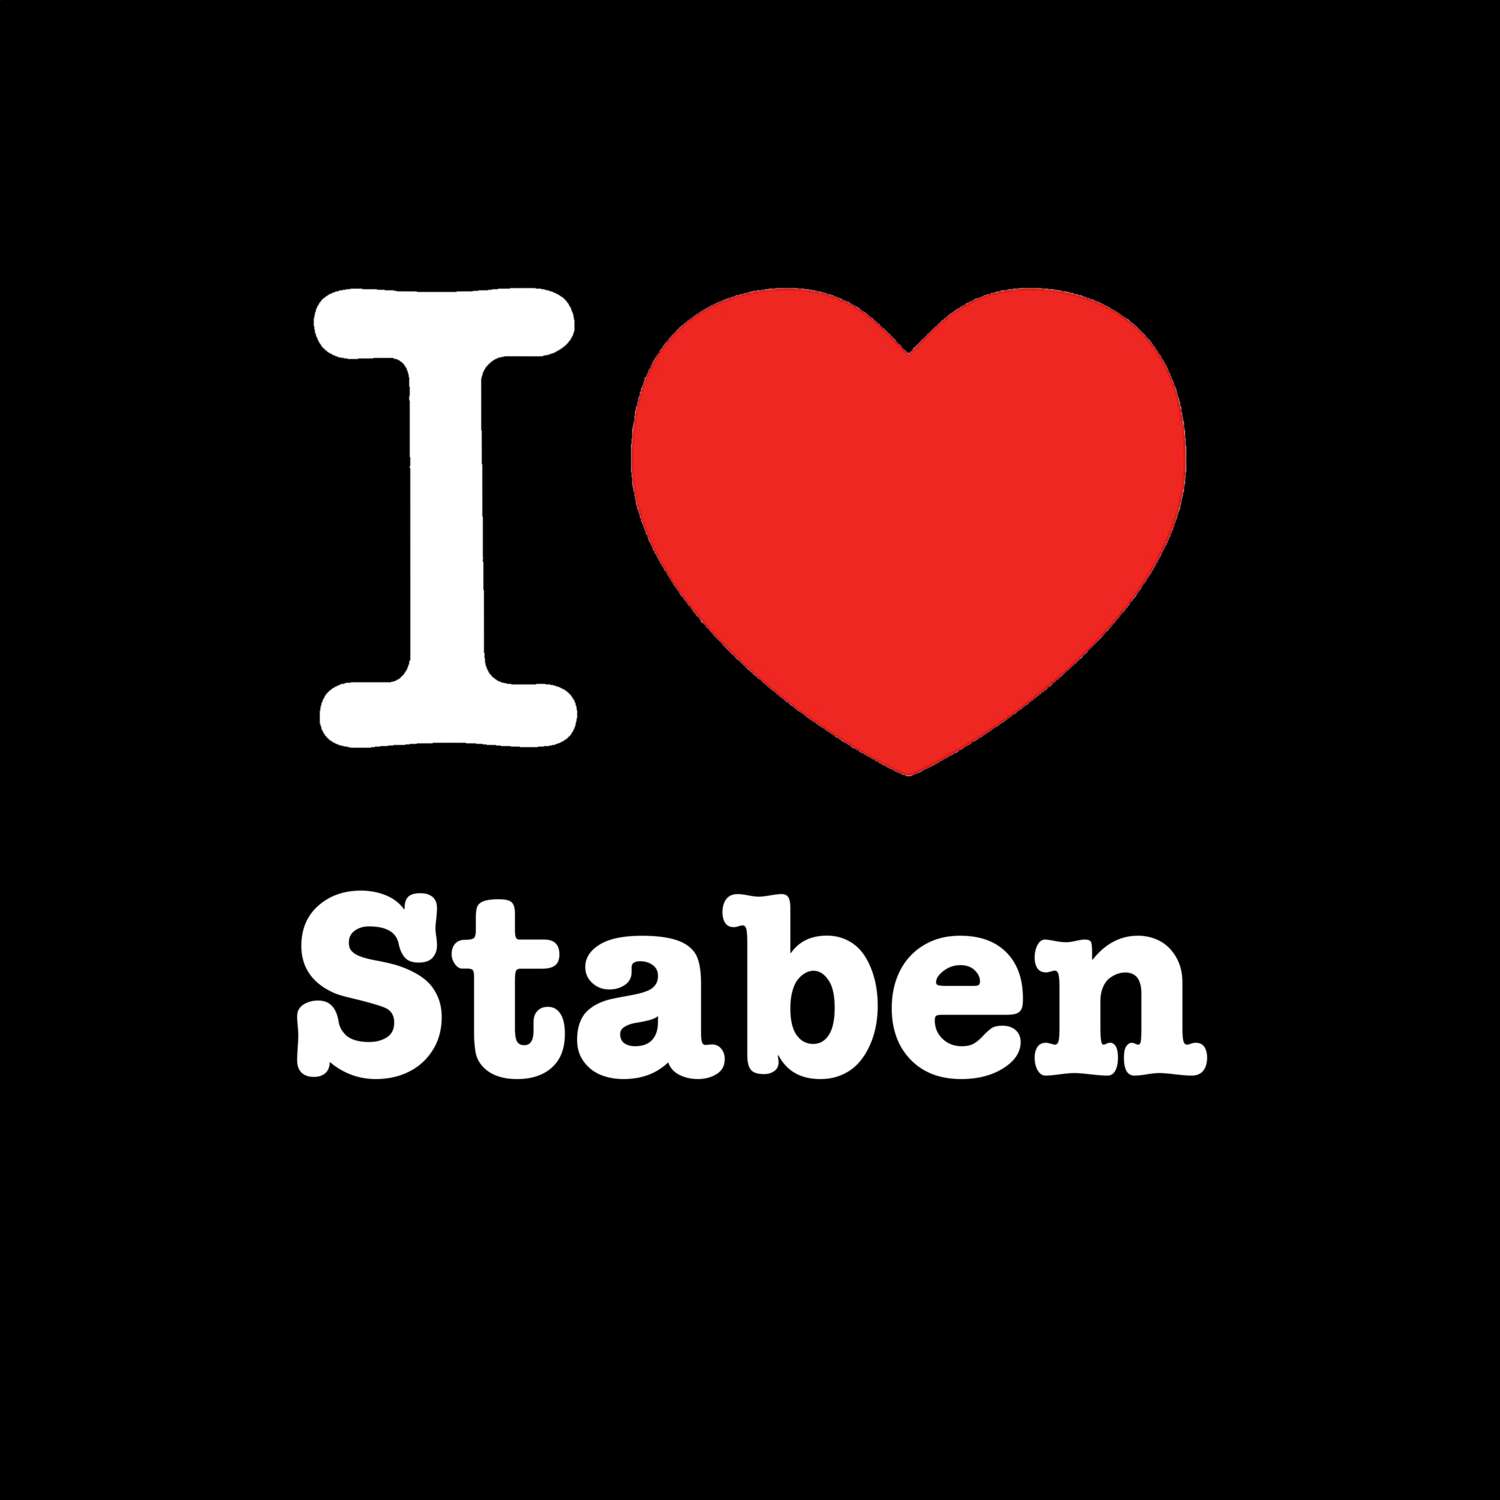 Staben T-Shirt »I love«